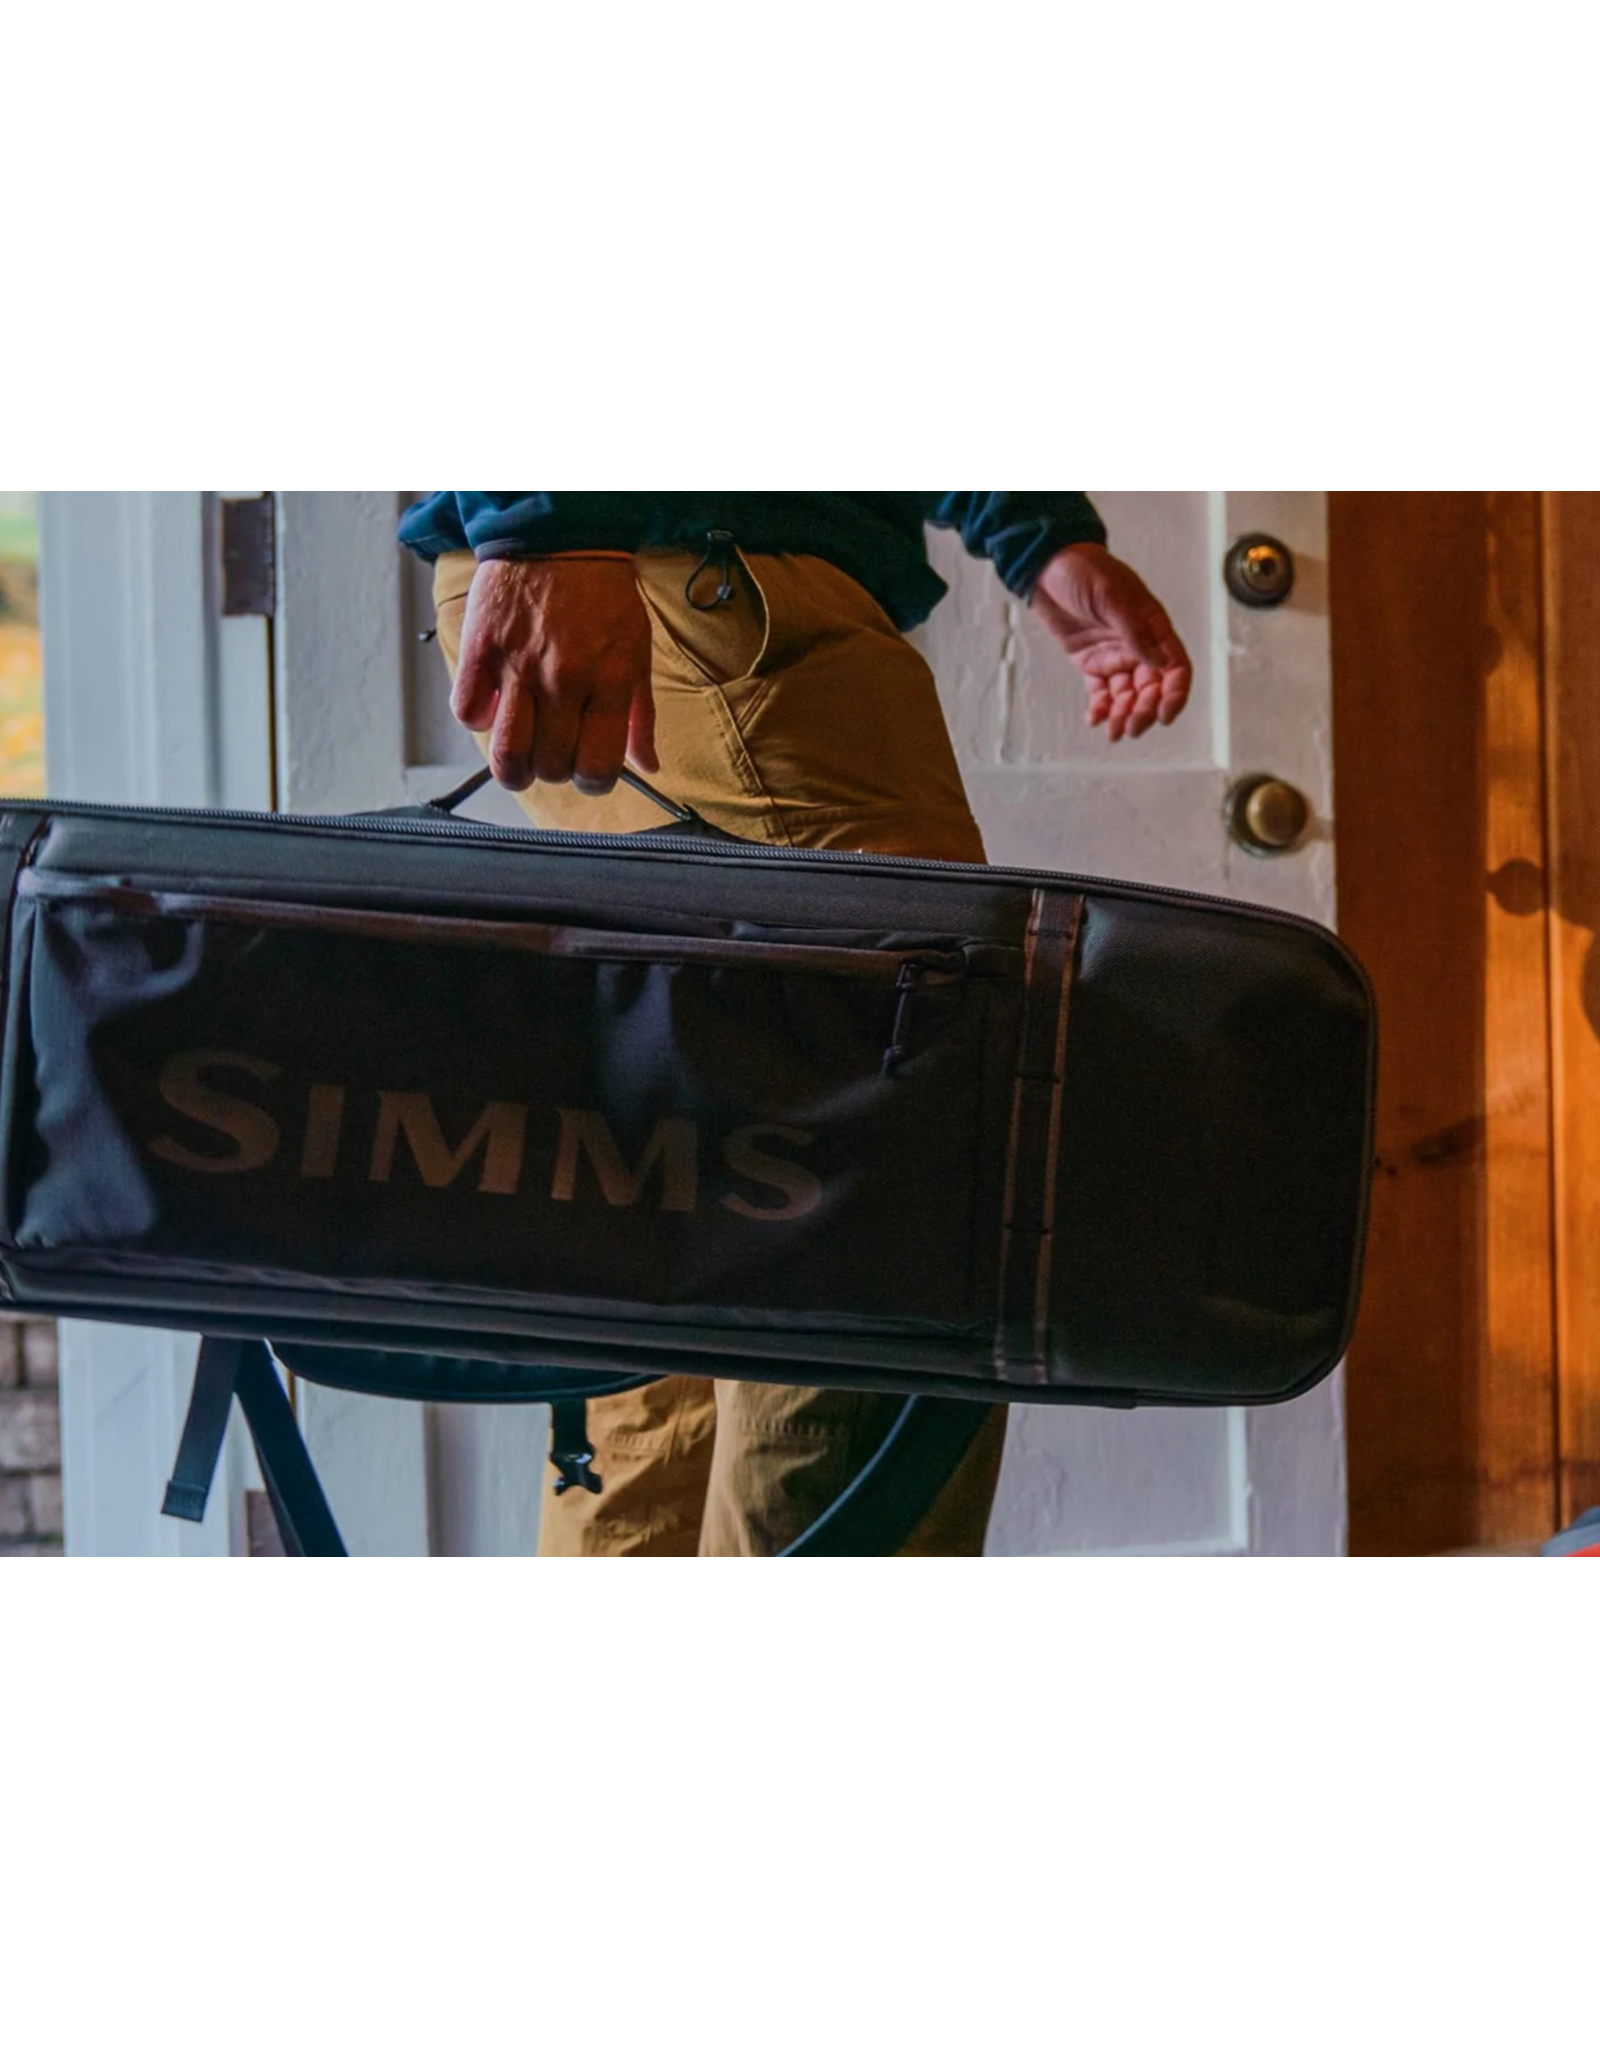 Simms - GTS Rod & Reel Vault - Mountain Angler